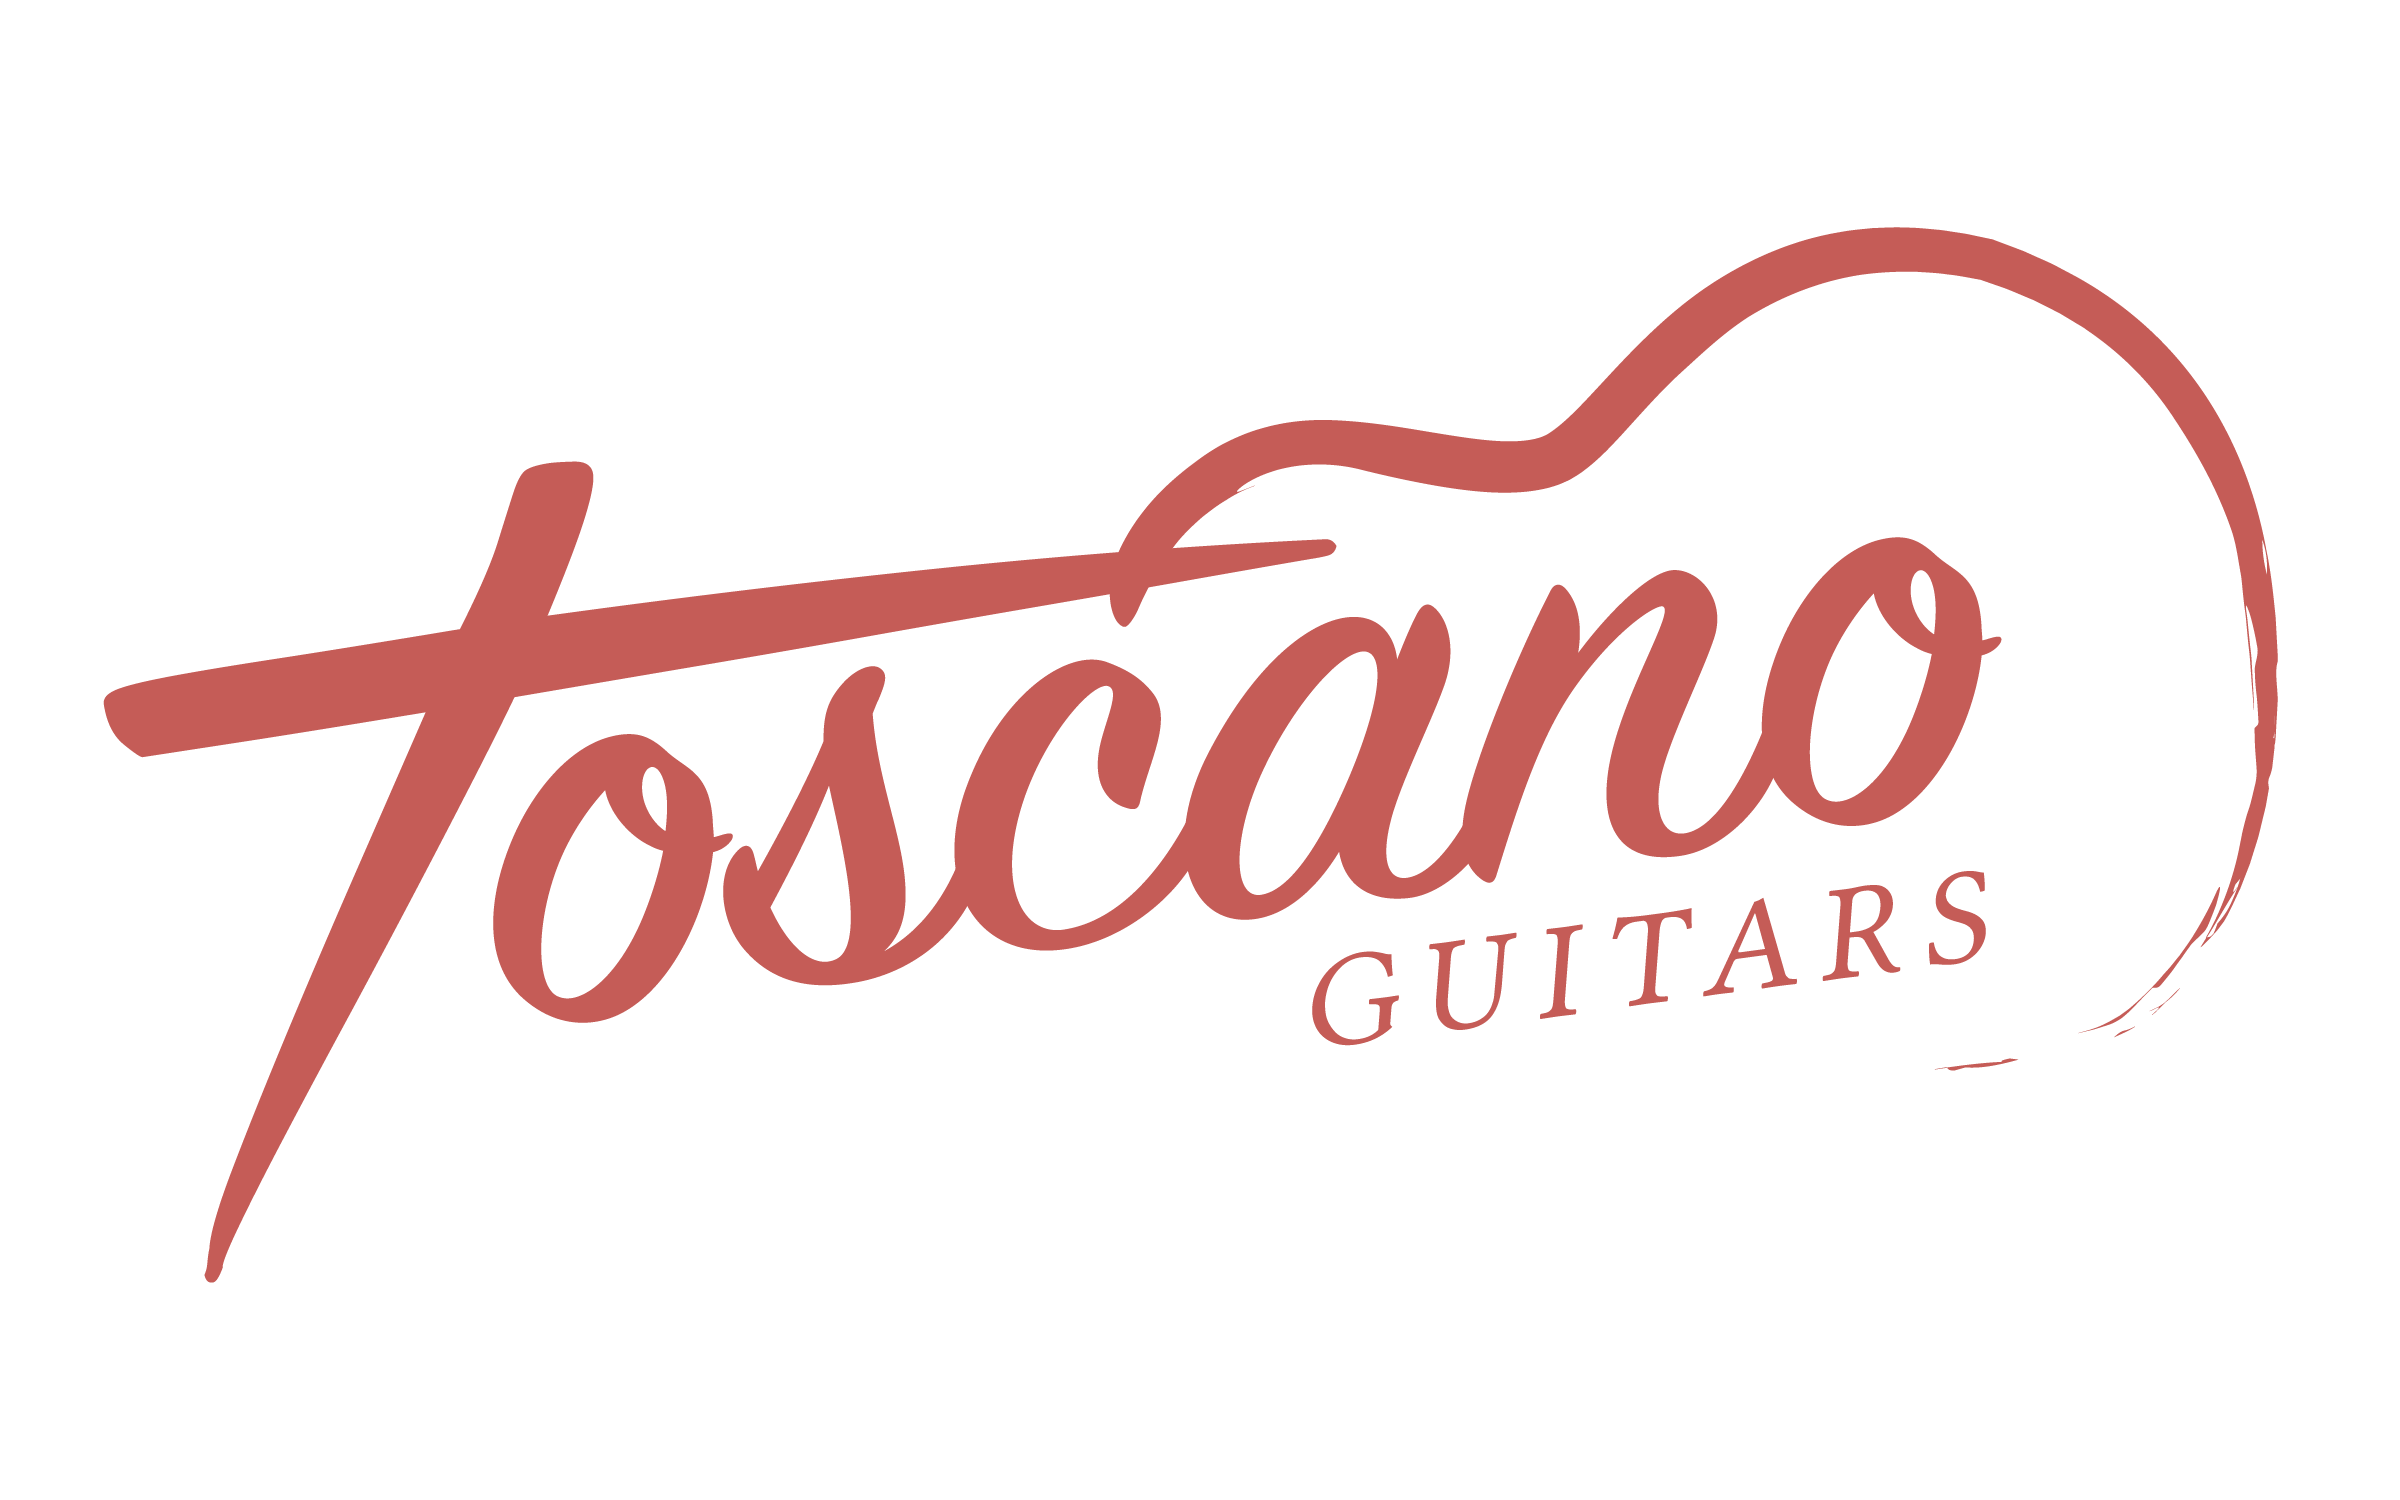 Steve Toscano Guitars